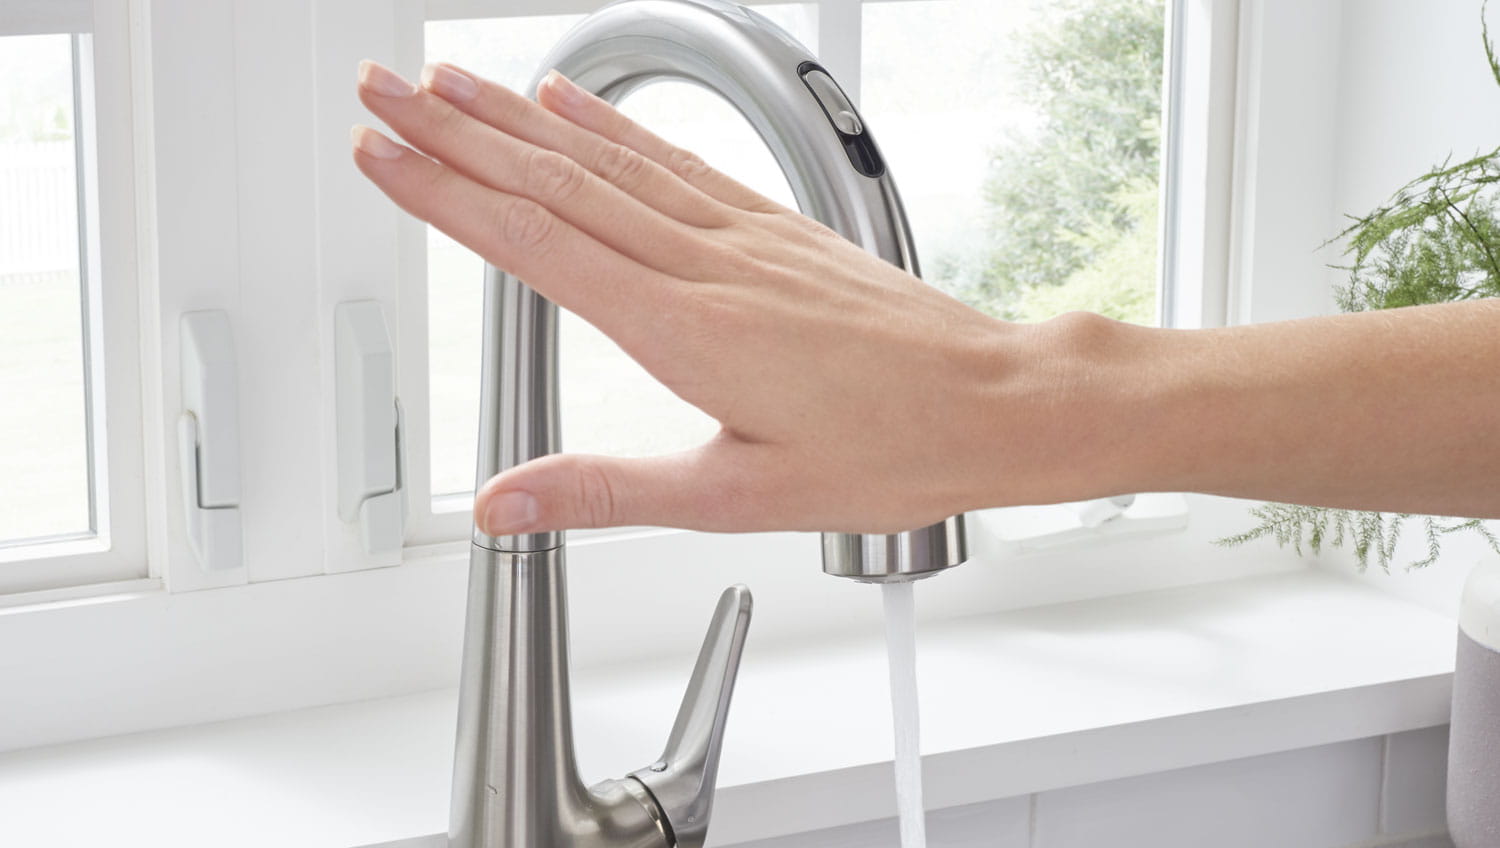 Touchless Kitchen Faucet